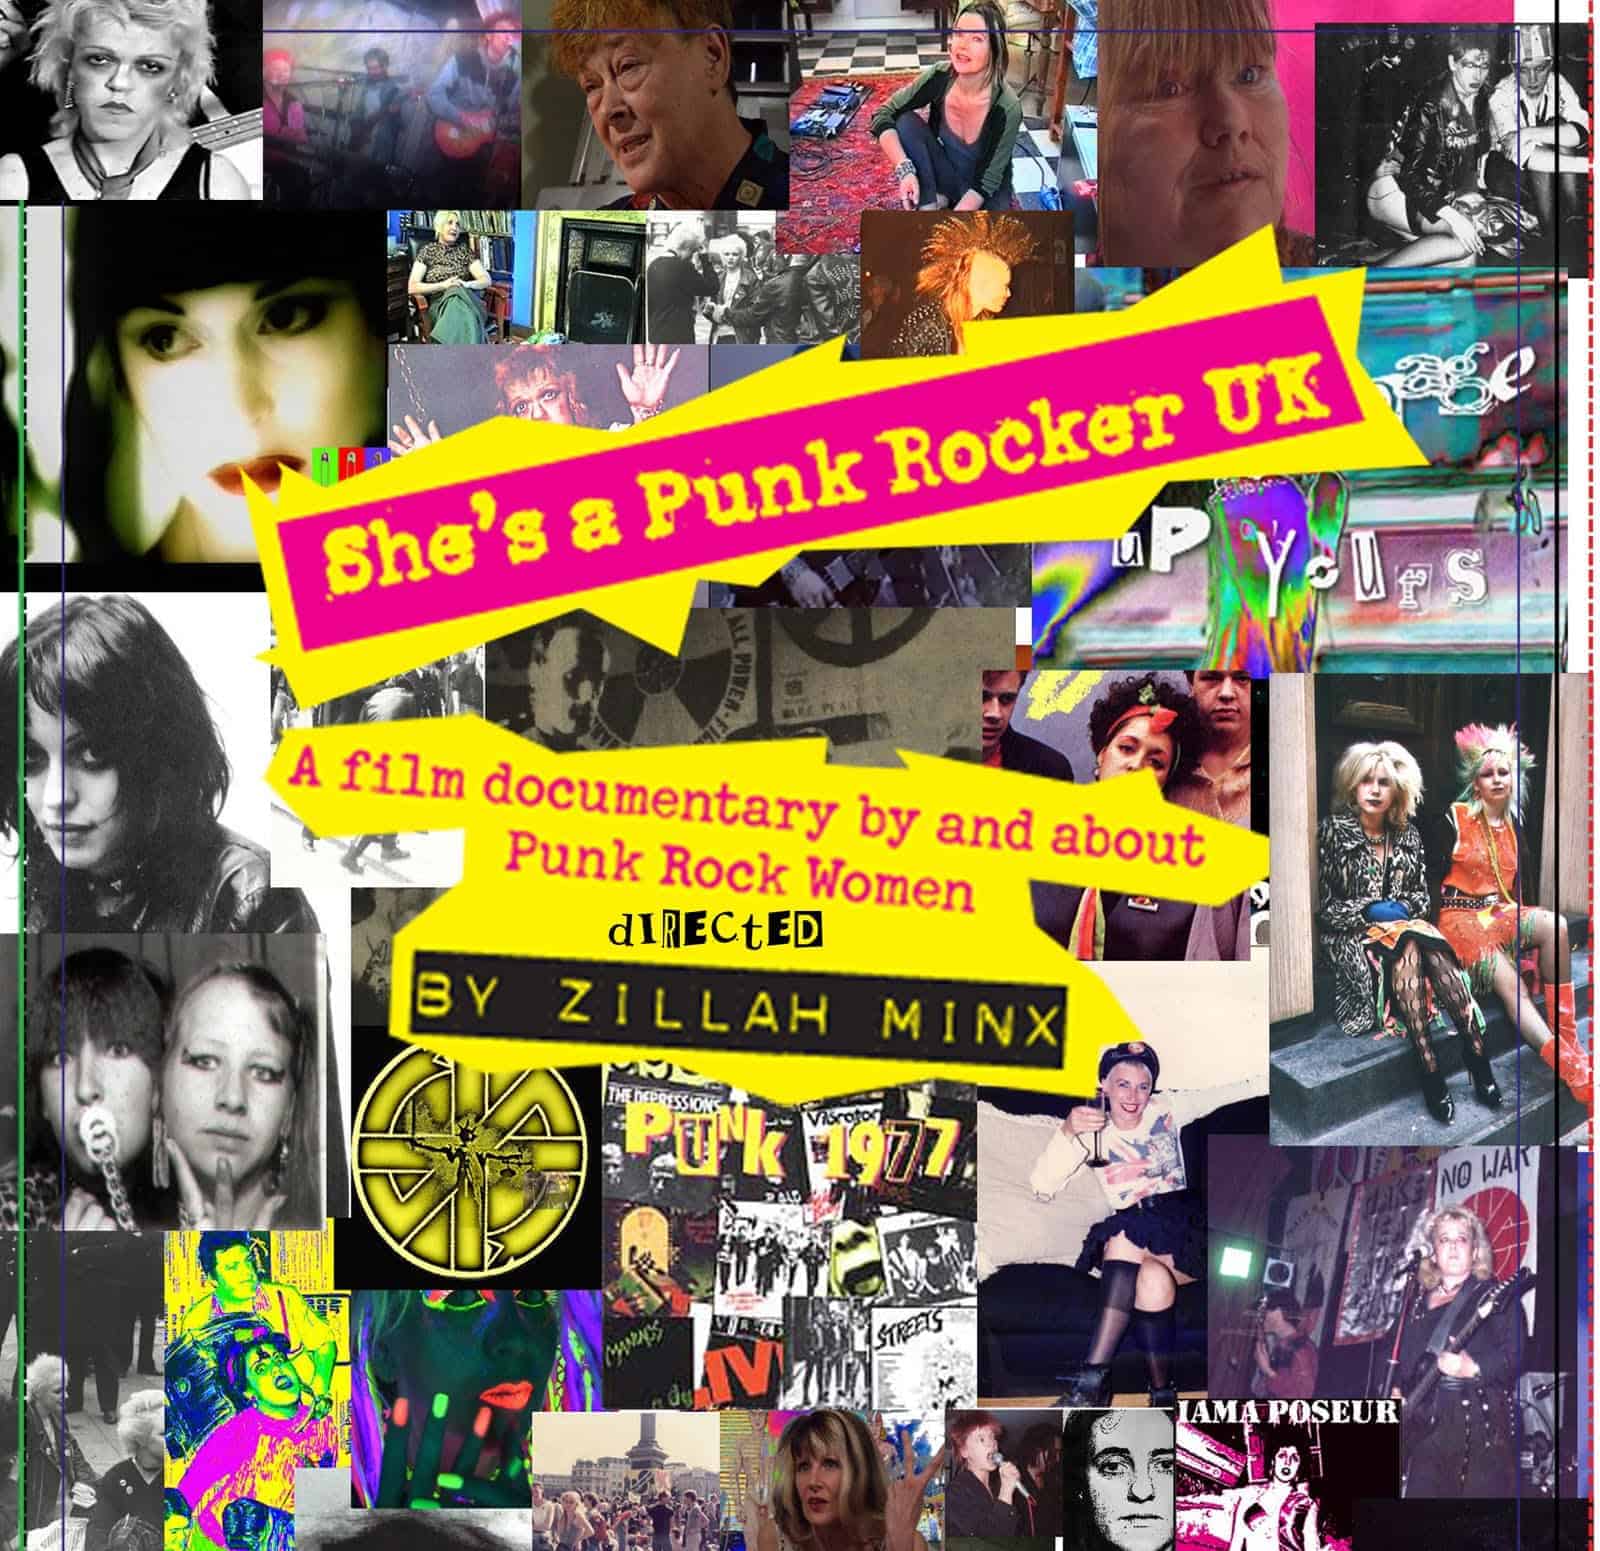 She’s a Punk Rocker UK